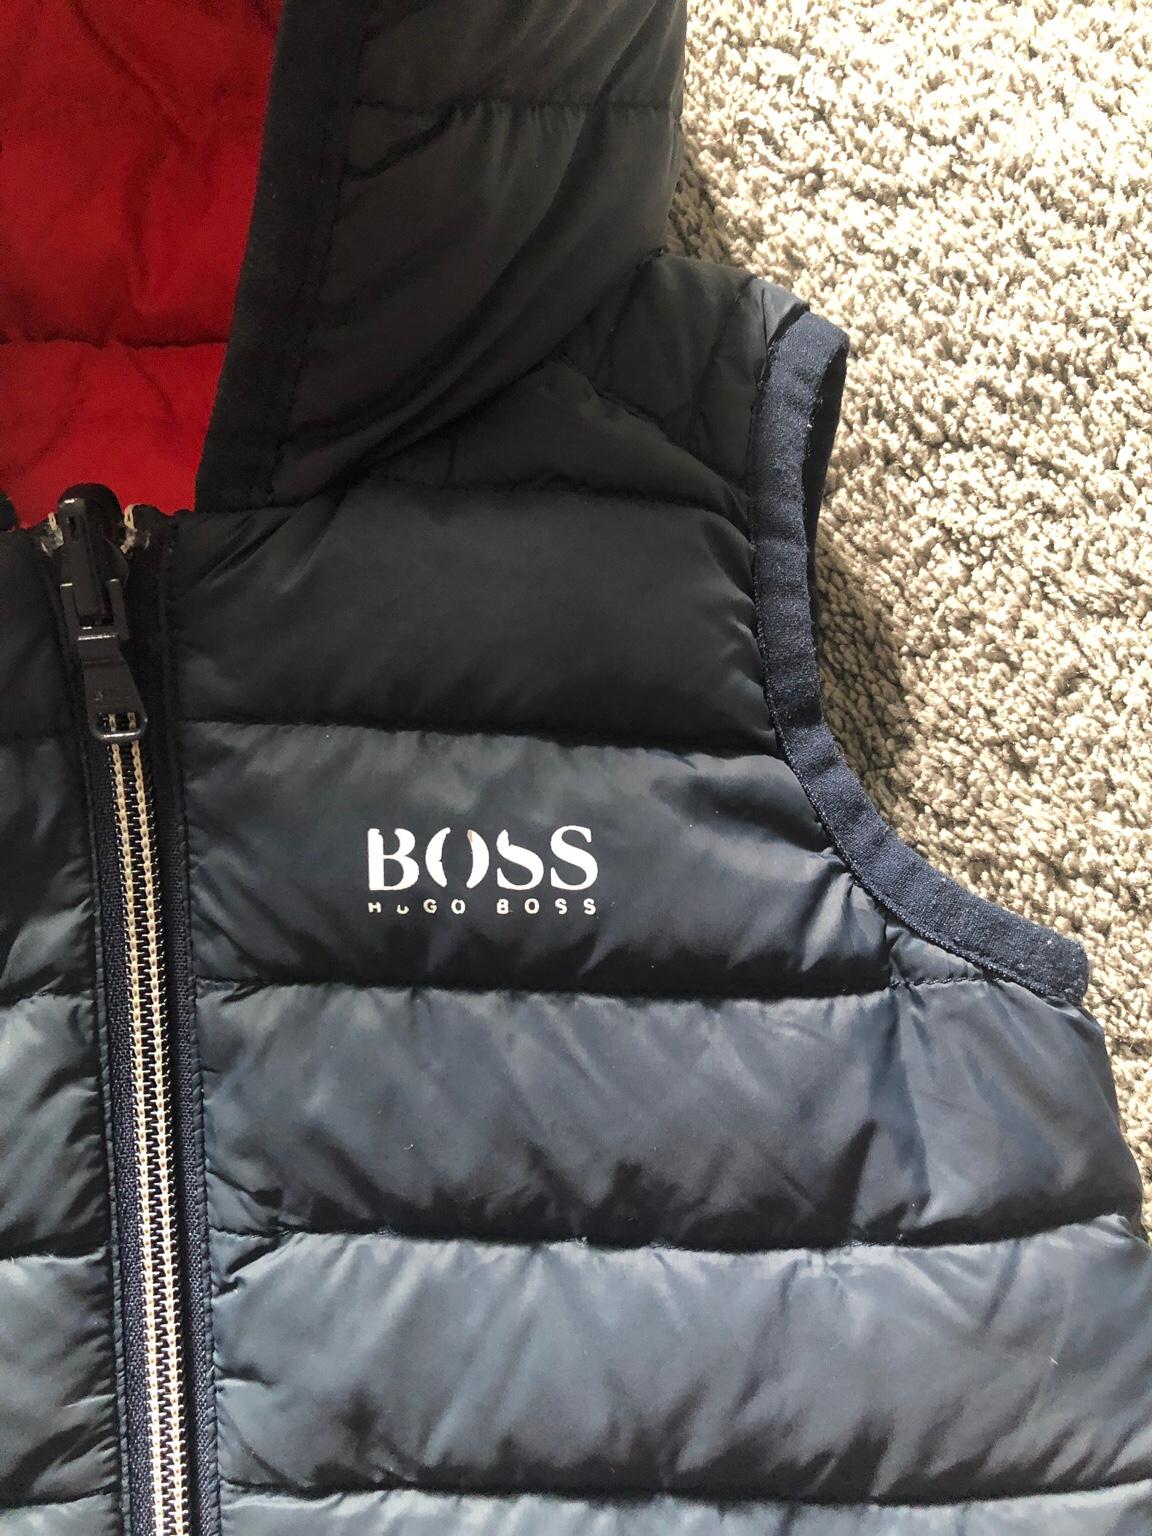 hugo boss body warmer sale